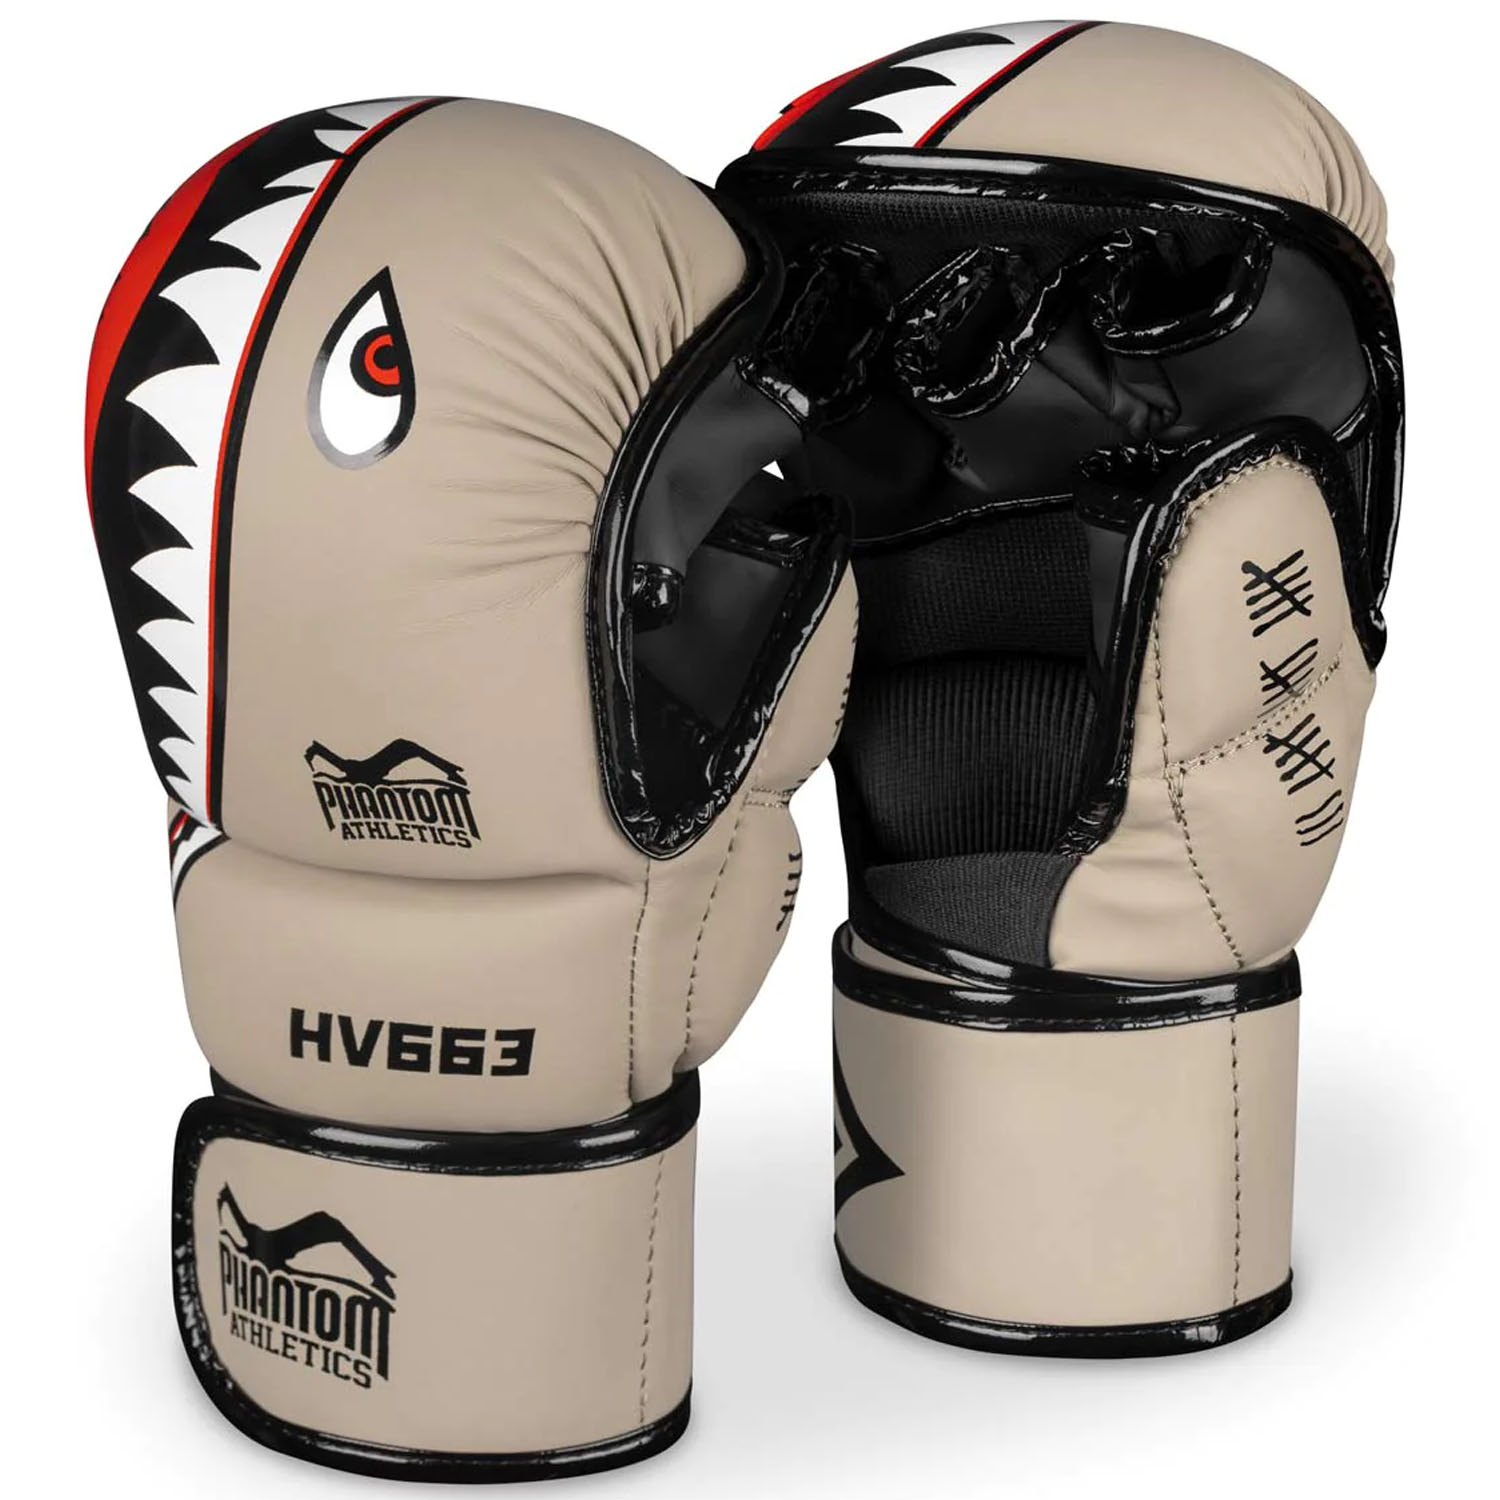 Phantom Athletics MMA Boxing Gloves, Fight Squad, Sparring, sand